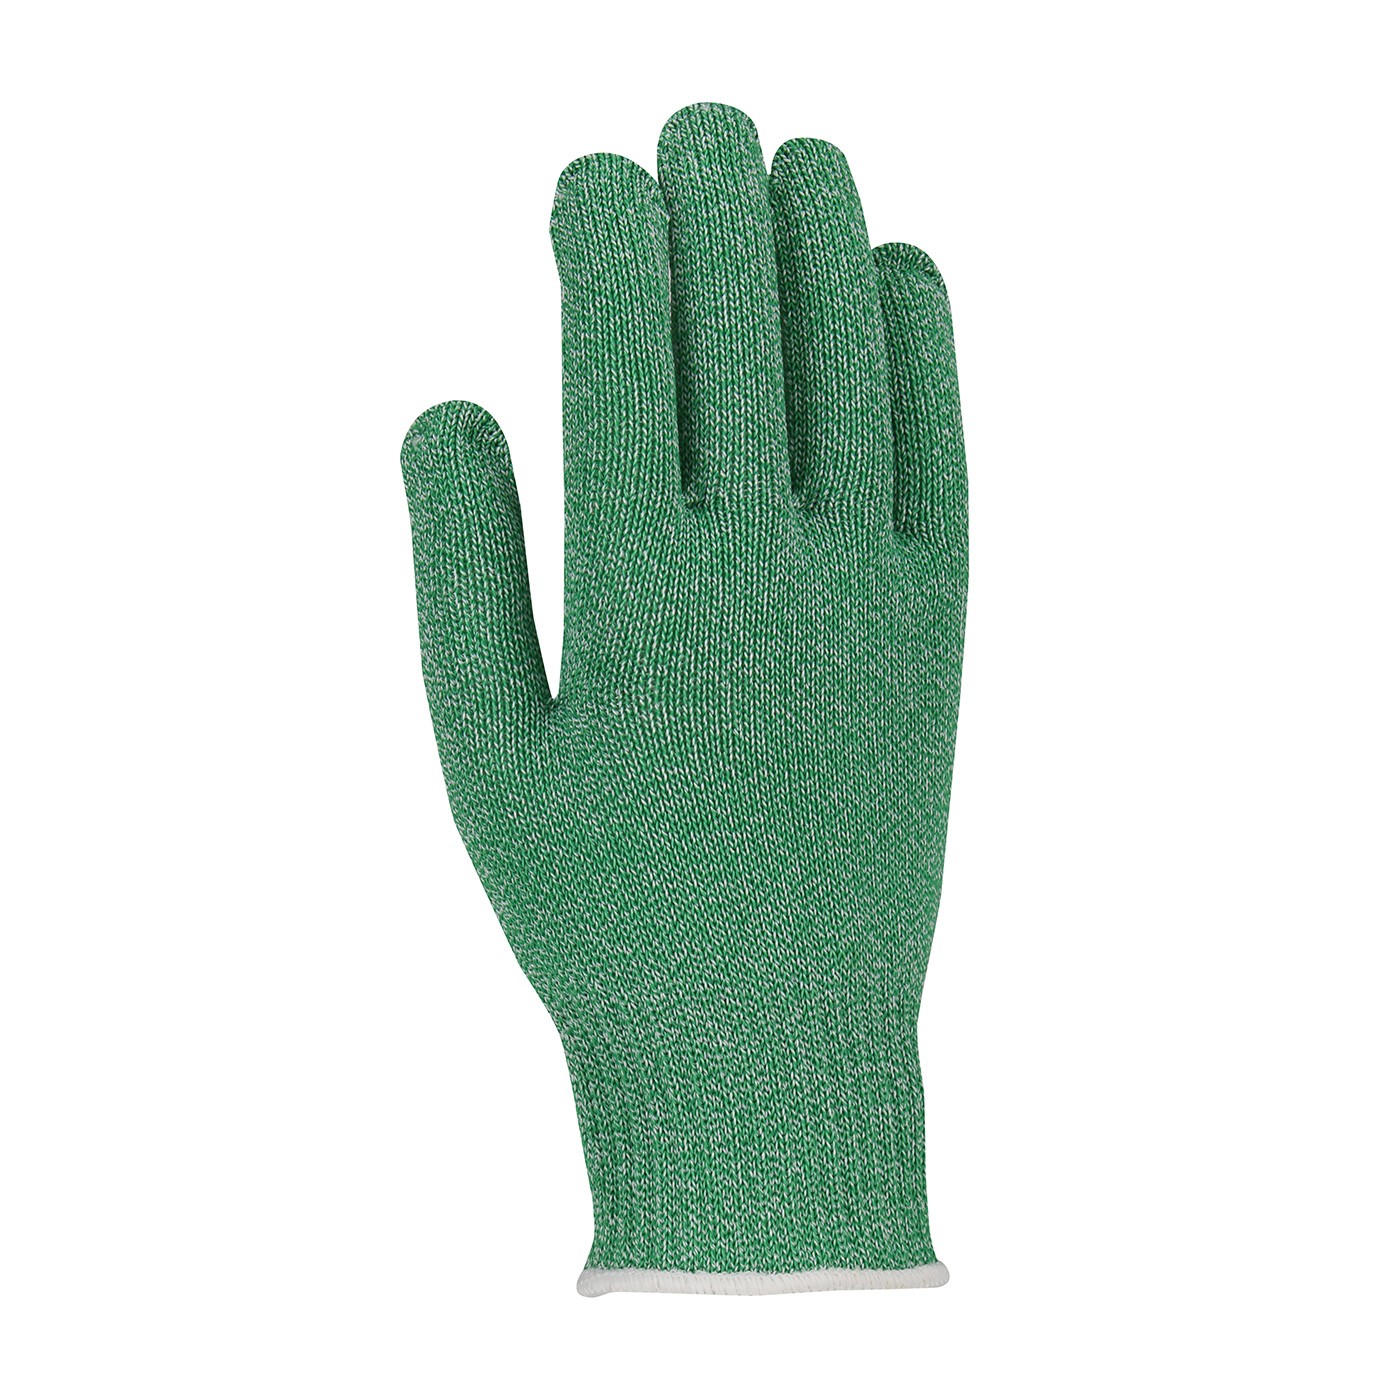 Kut Gard® Seamless Knit Dyneema® Blended Antimicrobial Glove - Medium Weight  (#22-760GRN)